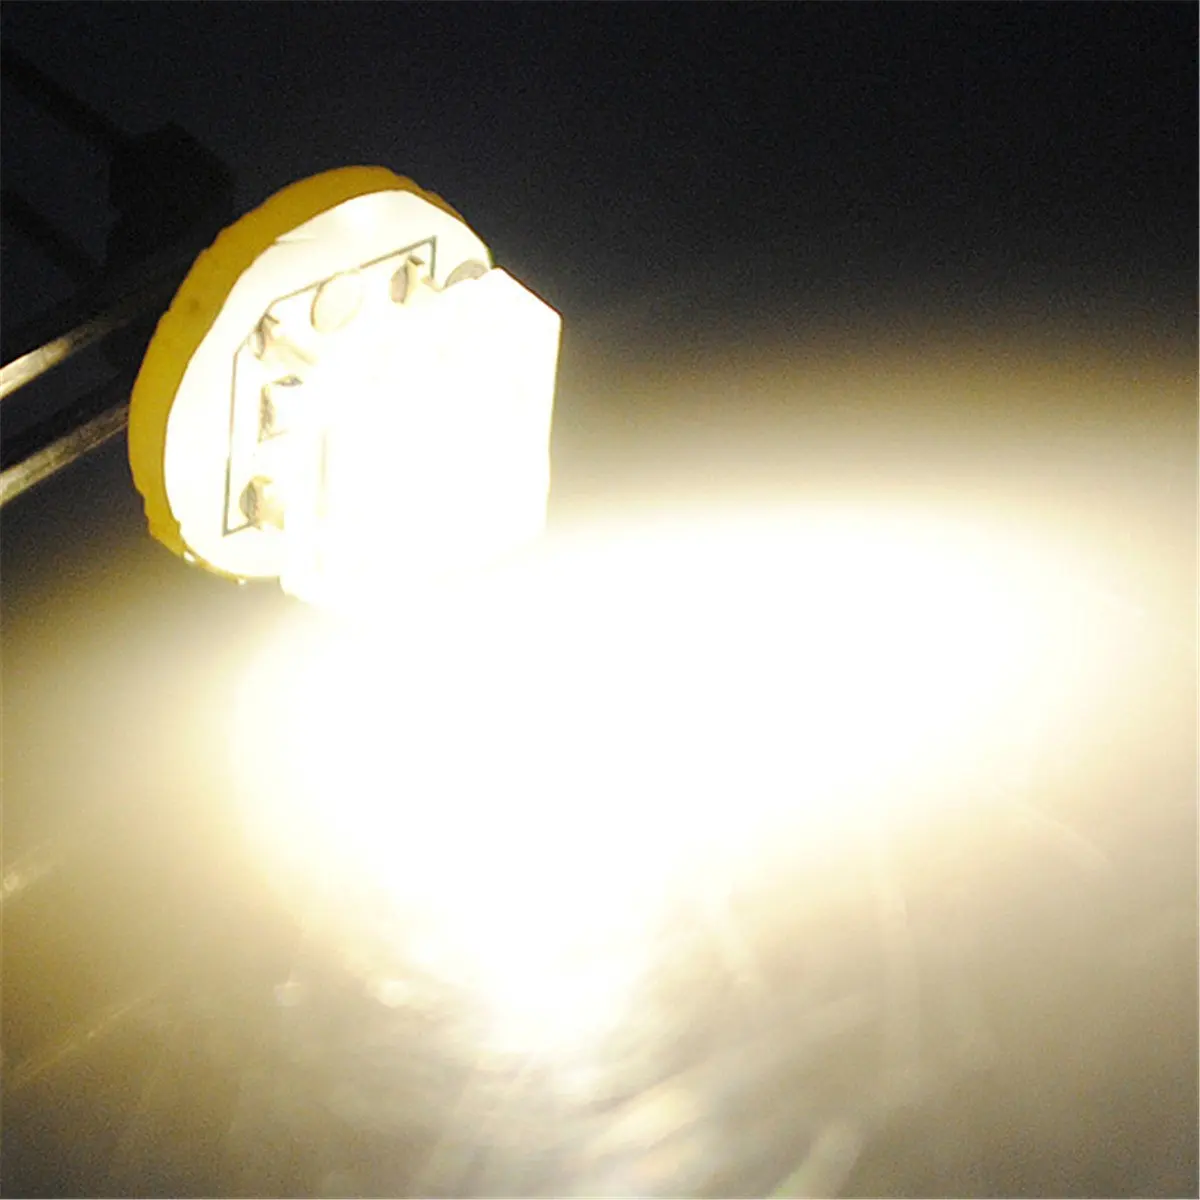 BIFI-10 x G 4 светодиодный SMD 0,2 Вт 12 В светодиодный светильник теплый белый светильник для чтения RV Camper Boat